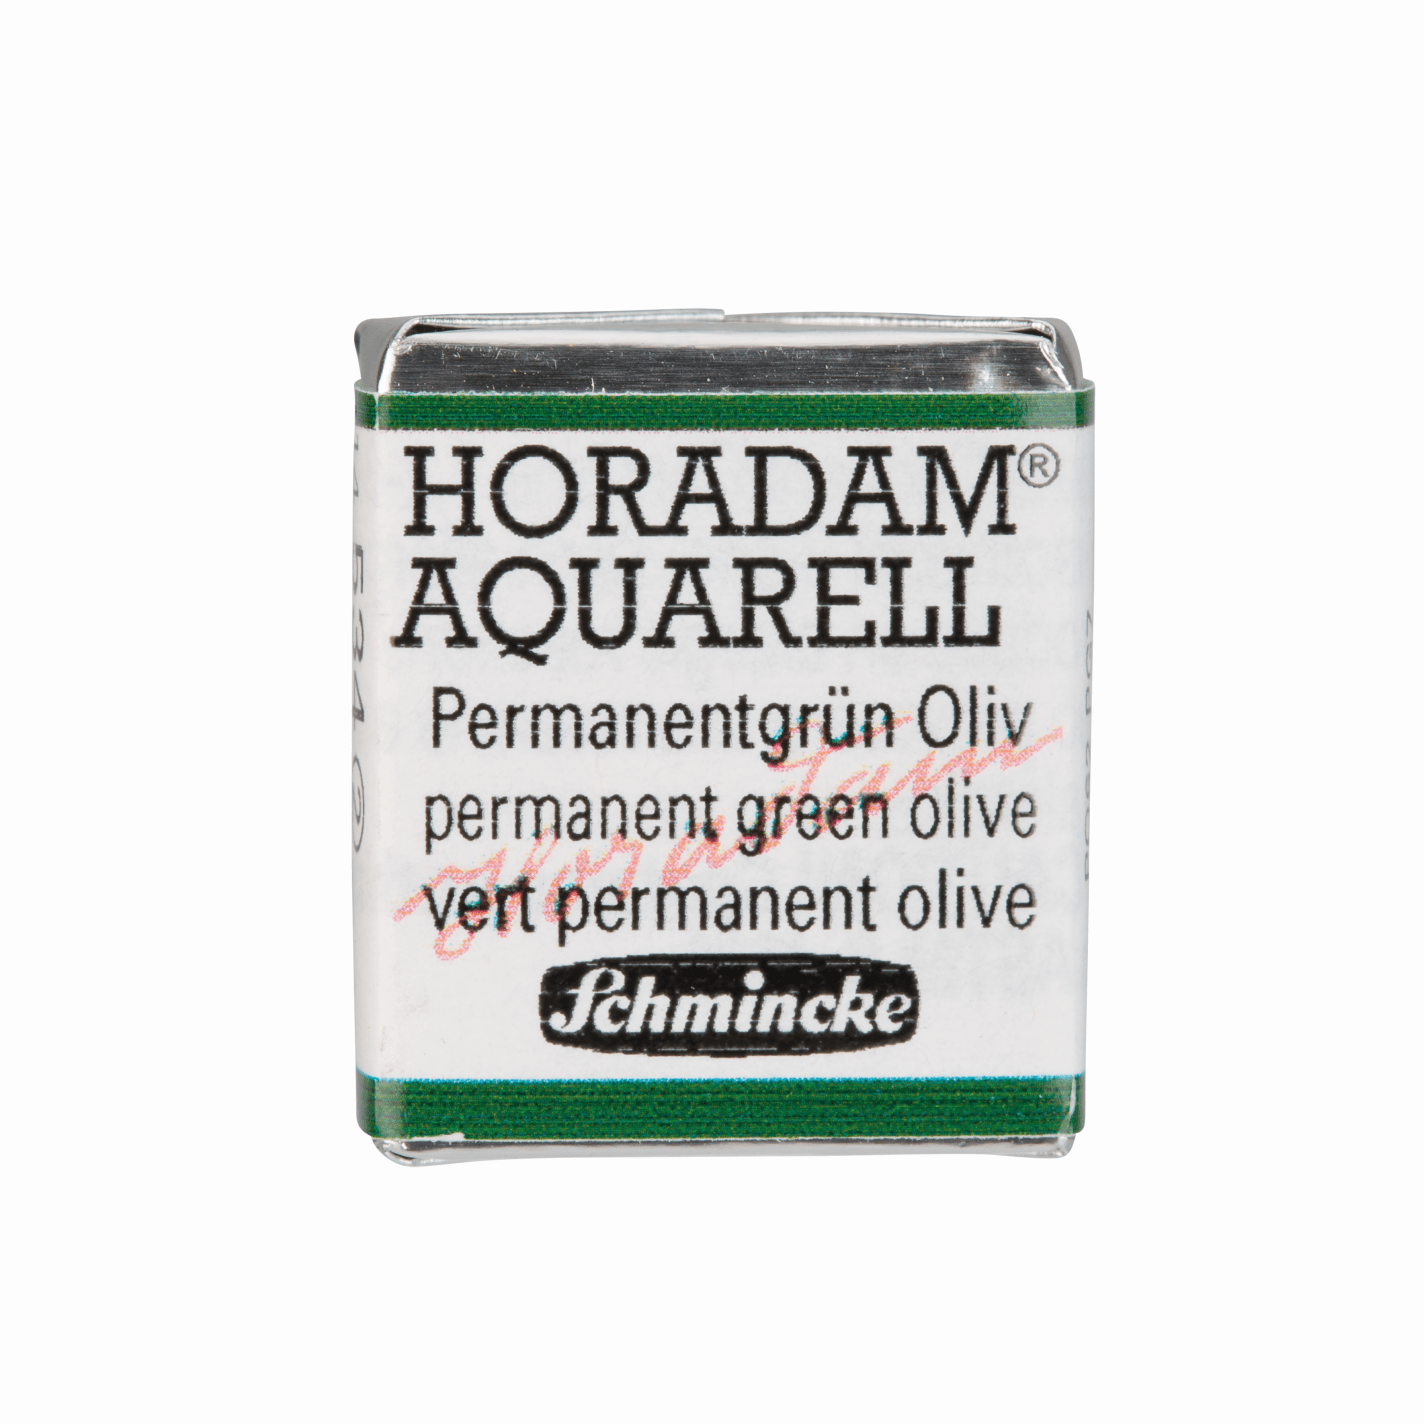 Schmincke Horadam Aquarell pans 1/2 pan Permanent Green Olive